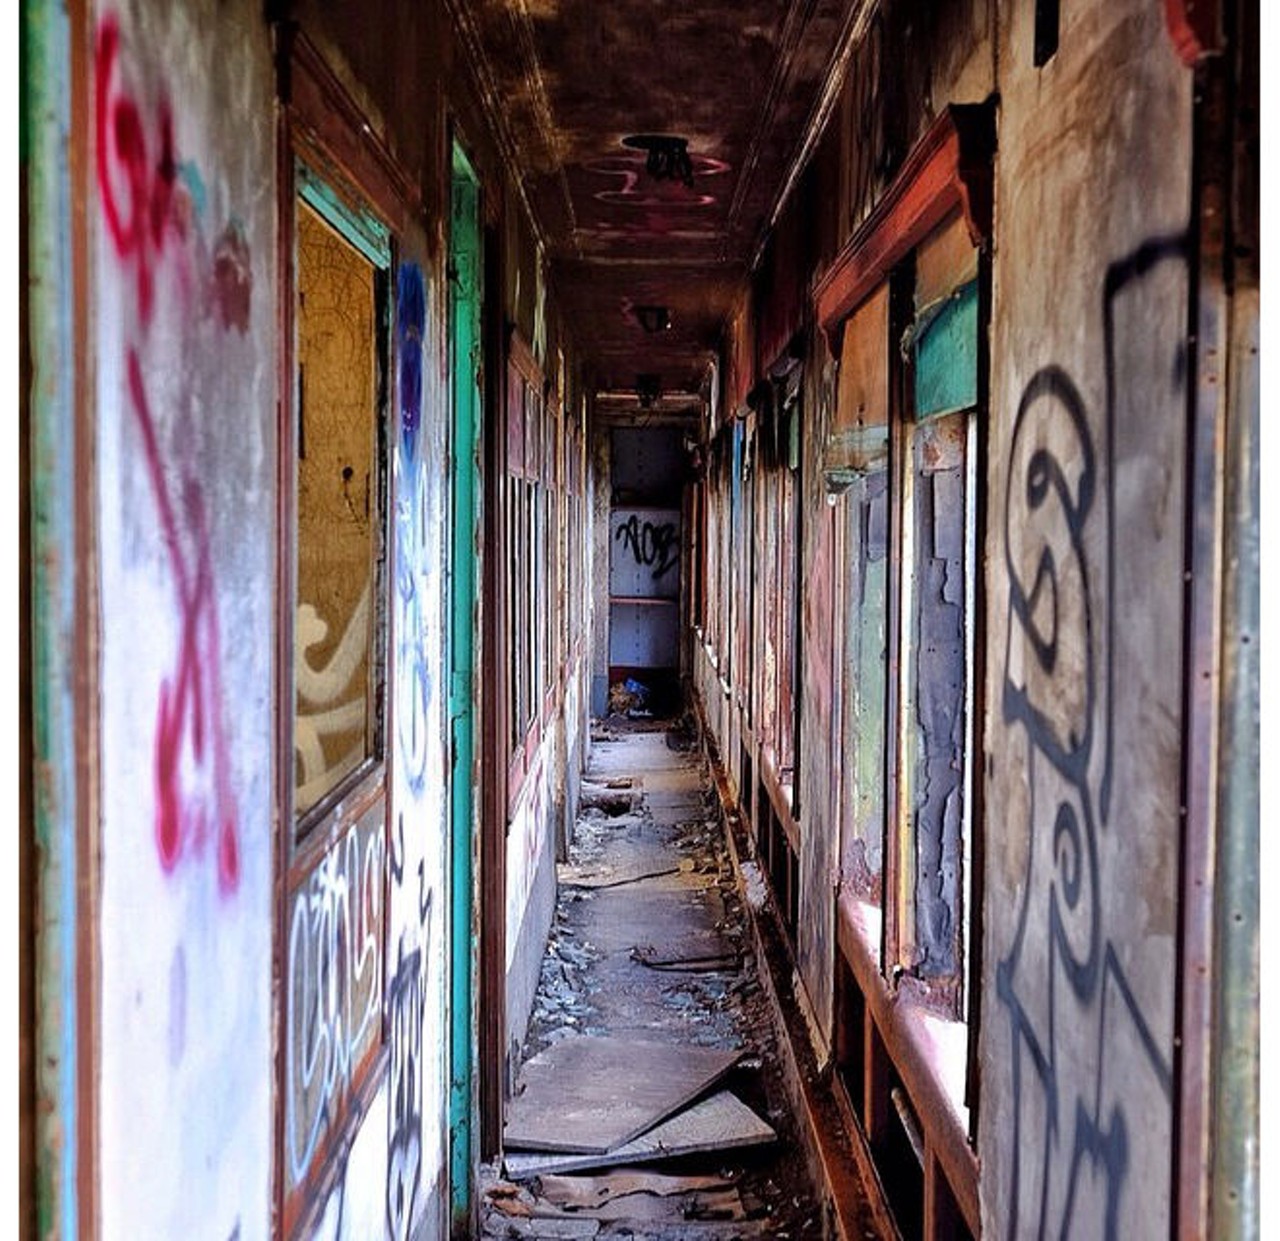 Abandoned train in an unknown locationInstagram: michaellangeloo_